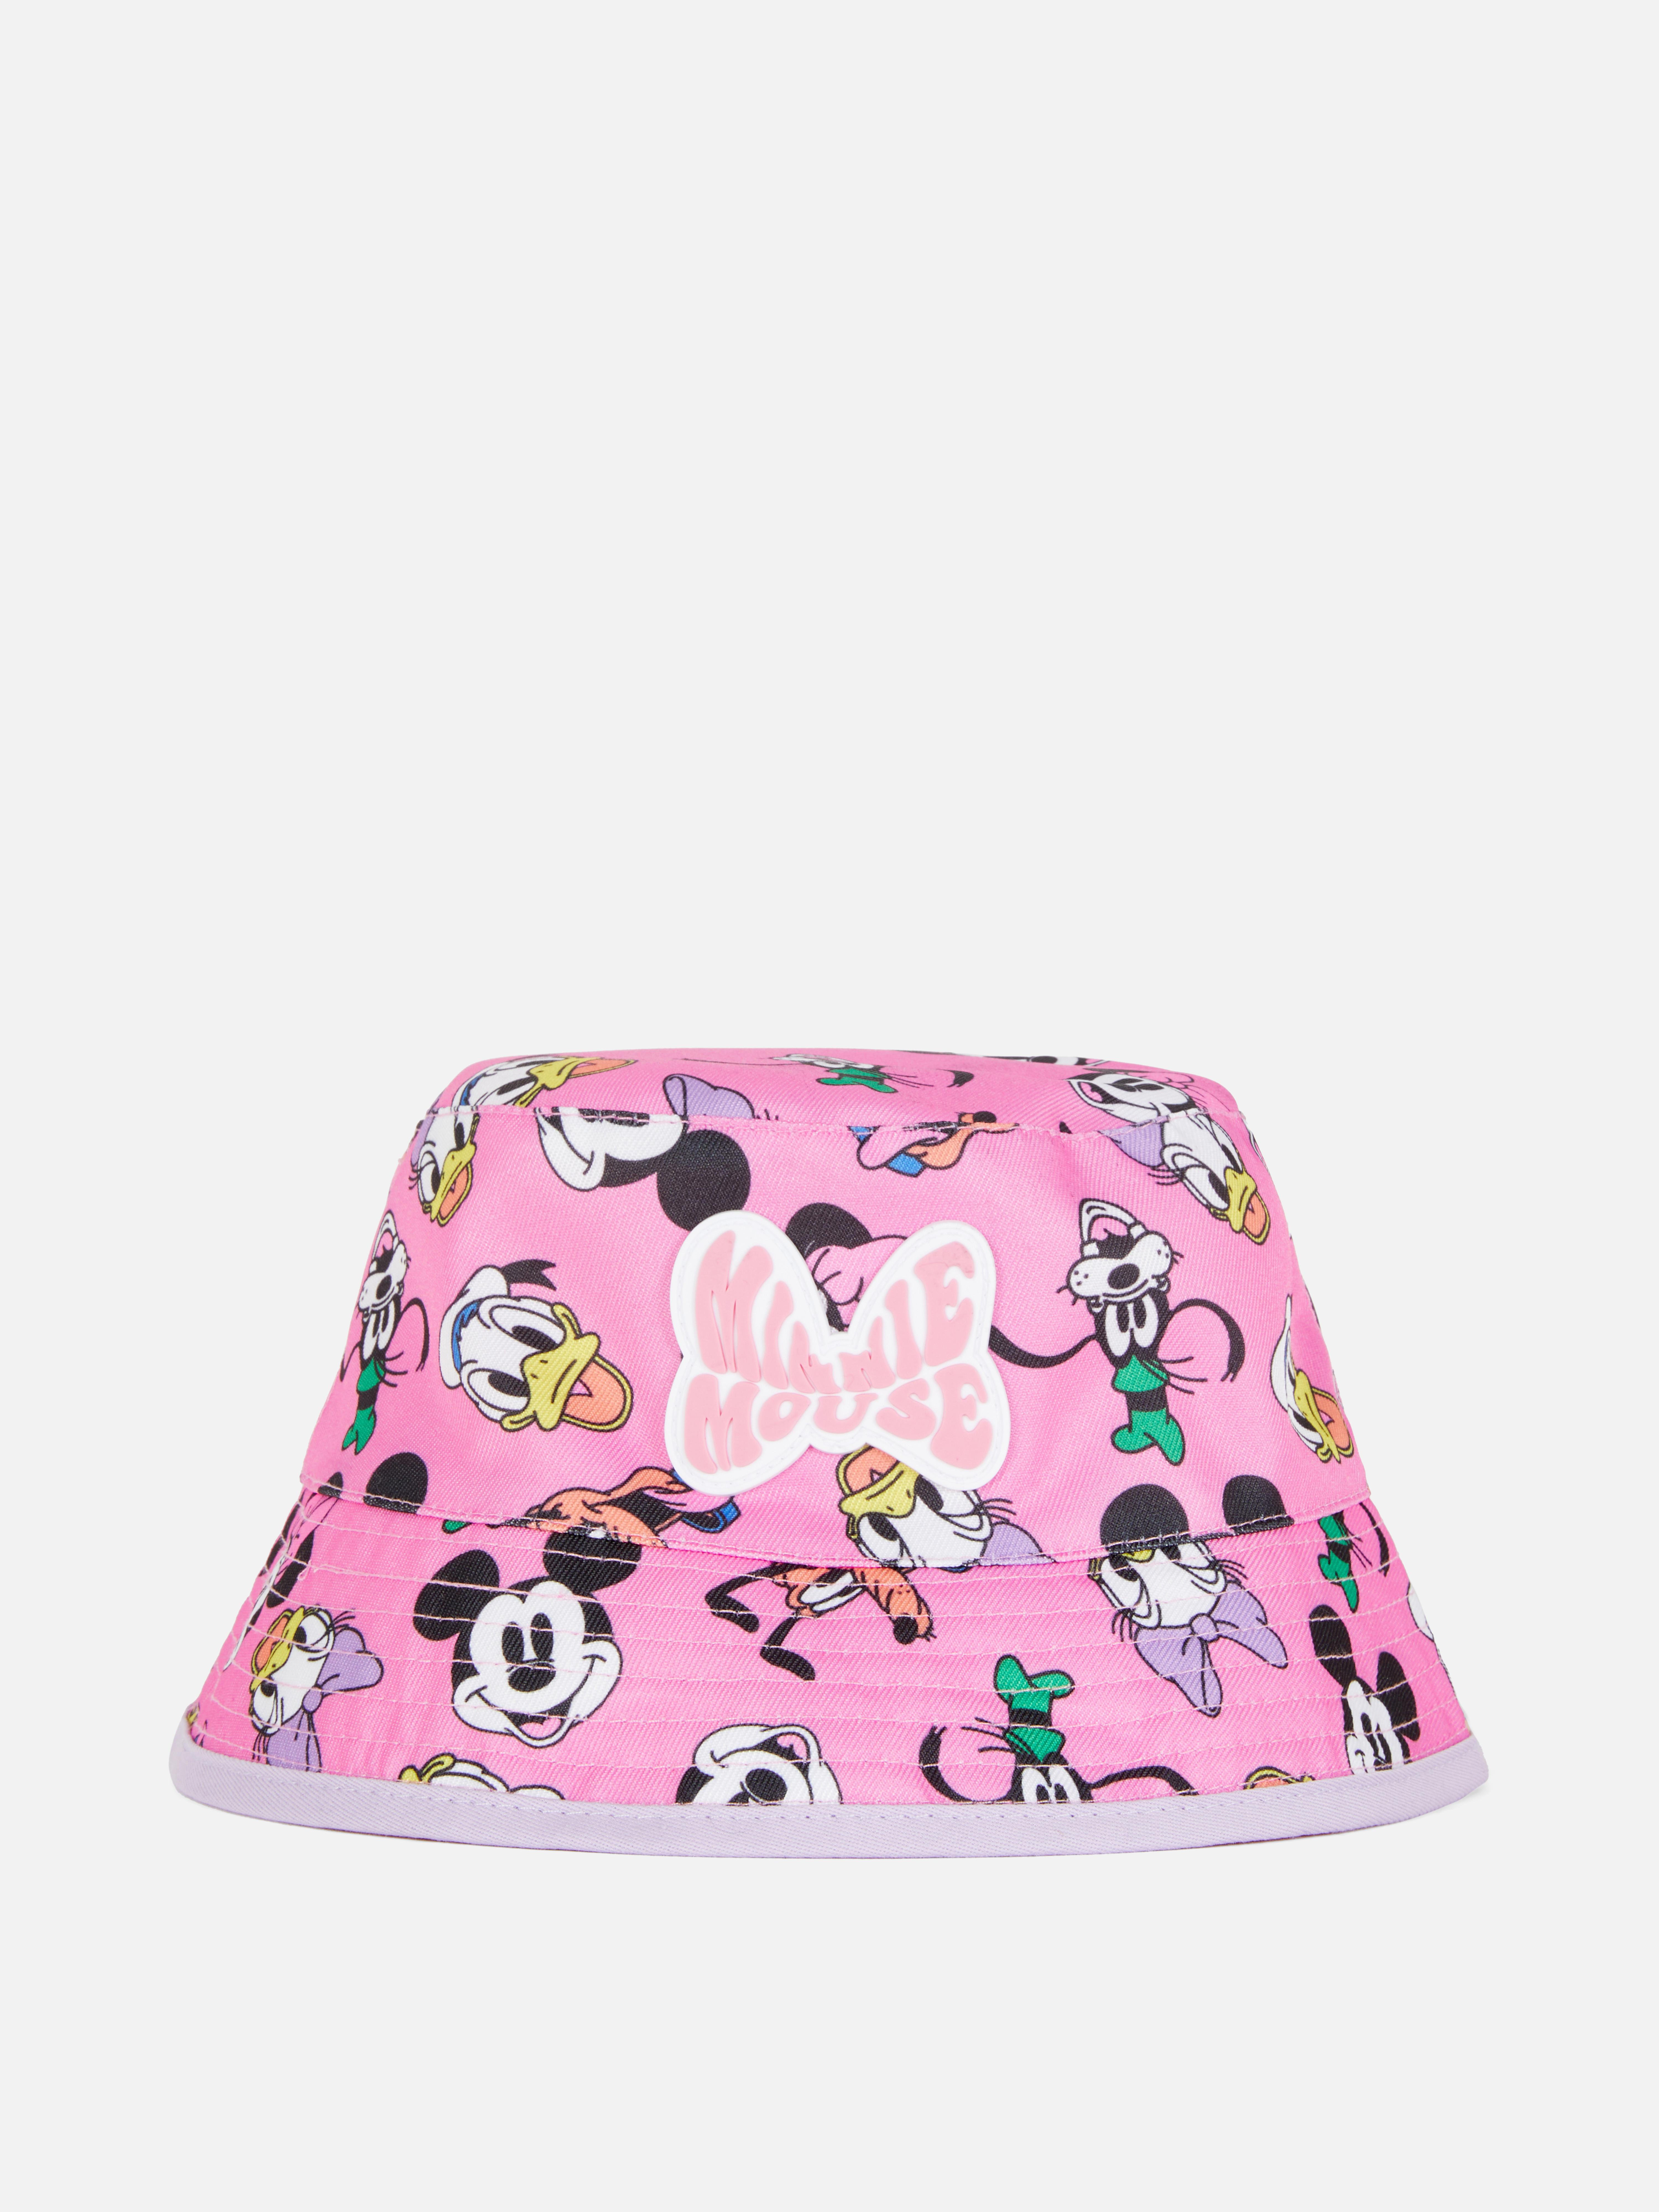 Disney's Minnie Mouse & Friends Bucket Hat